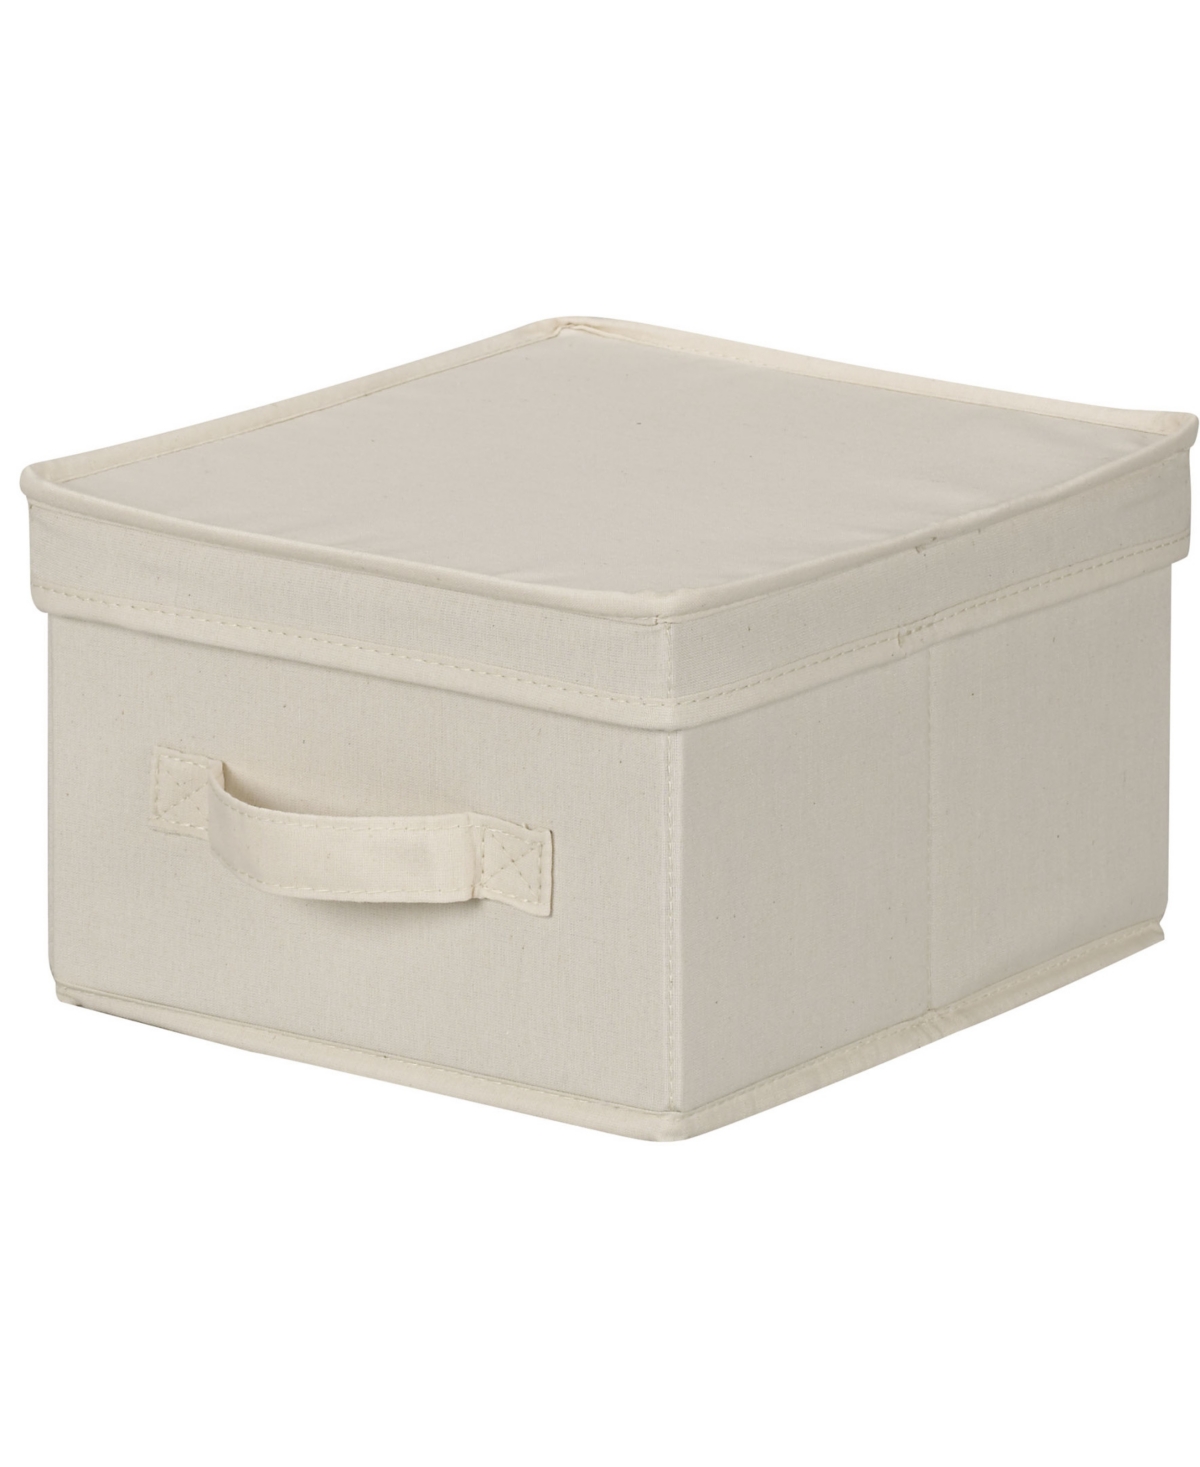 Household Essentials Medium Storage Bin With Lid, Natural In Cream